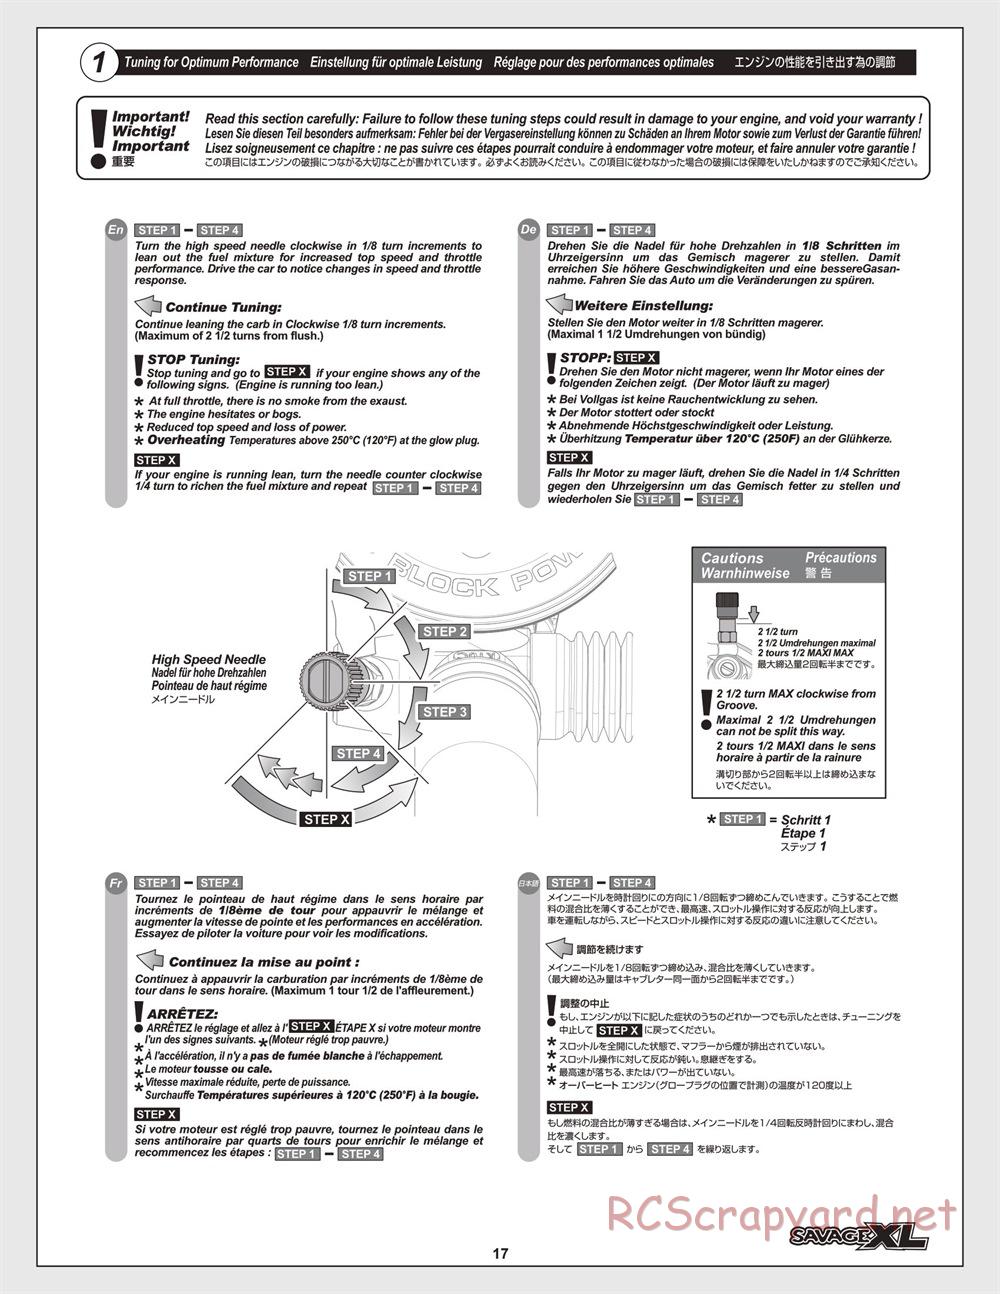 HPI - Savage XL 5.9 - Manual - Page 17